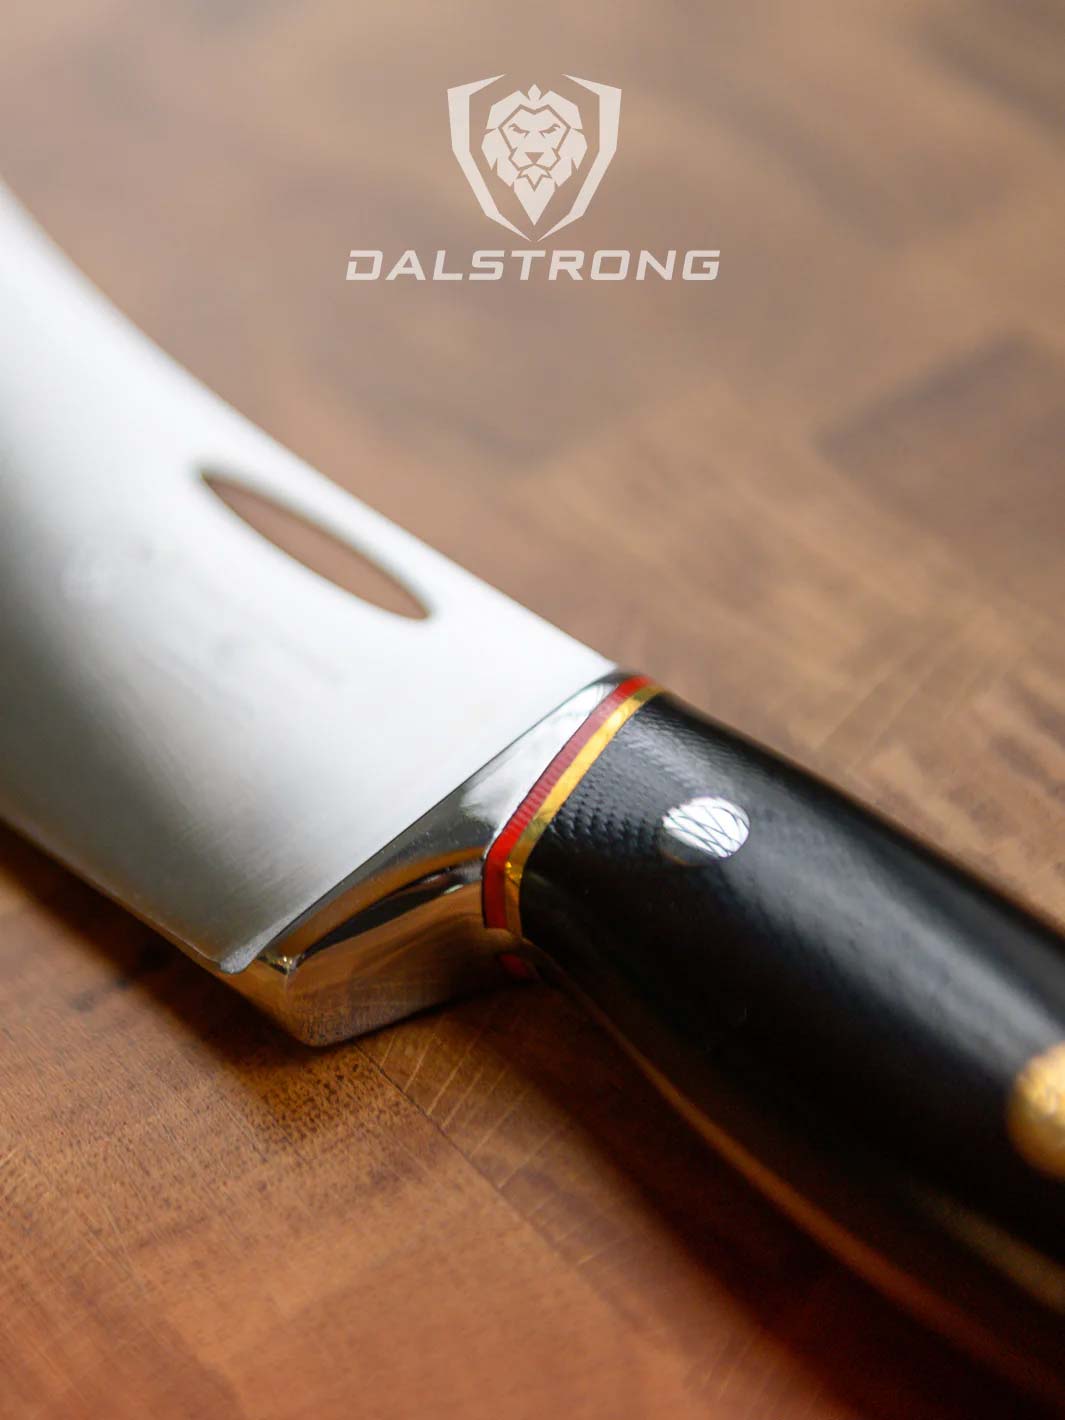 Dalstrong centurion series 8 inch crixus cleaver knife showcasing it's ergonomic black handle.